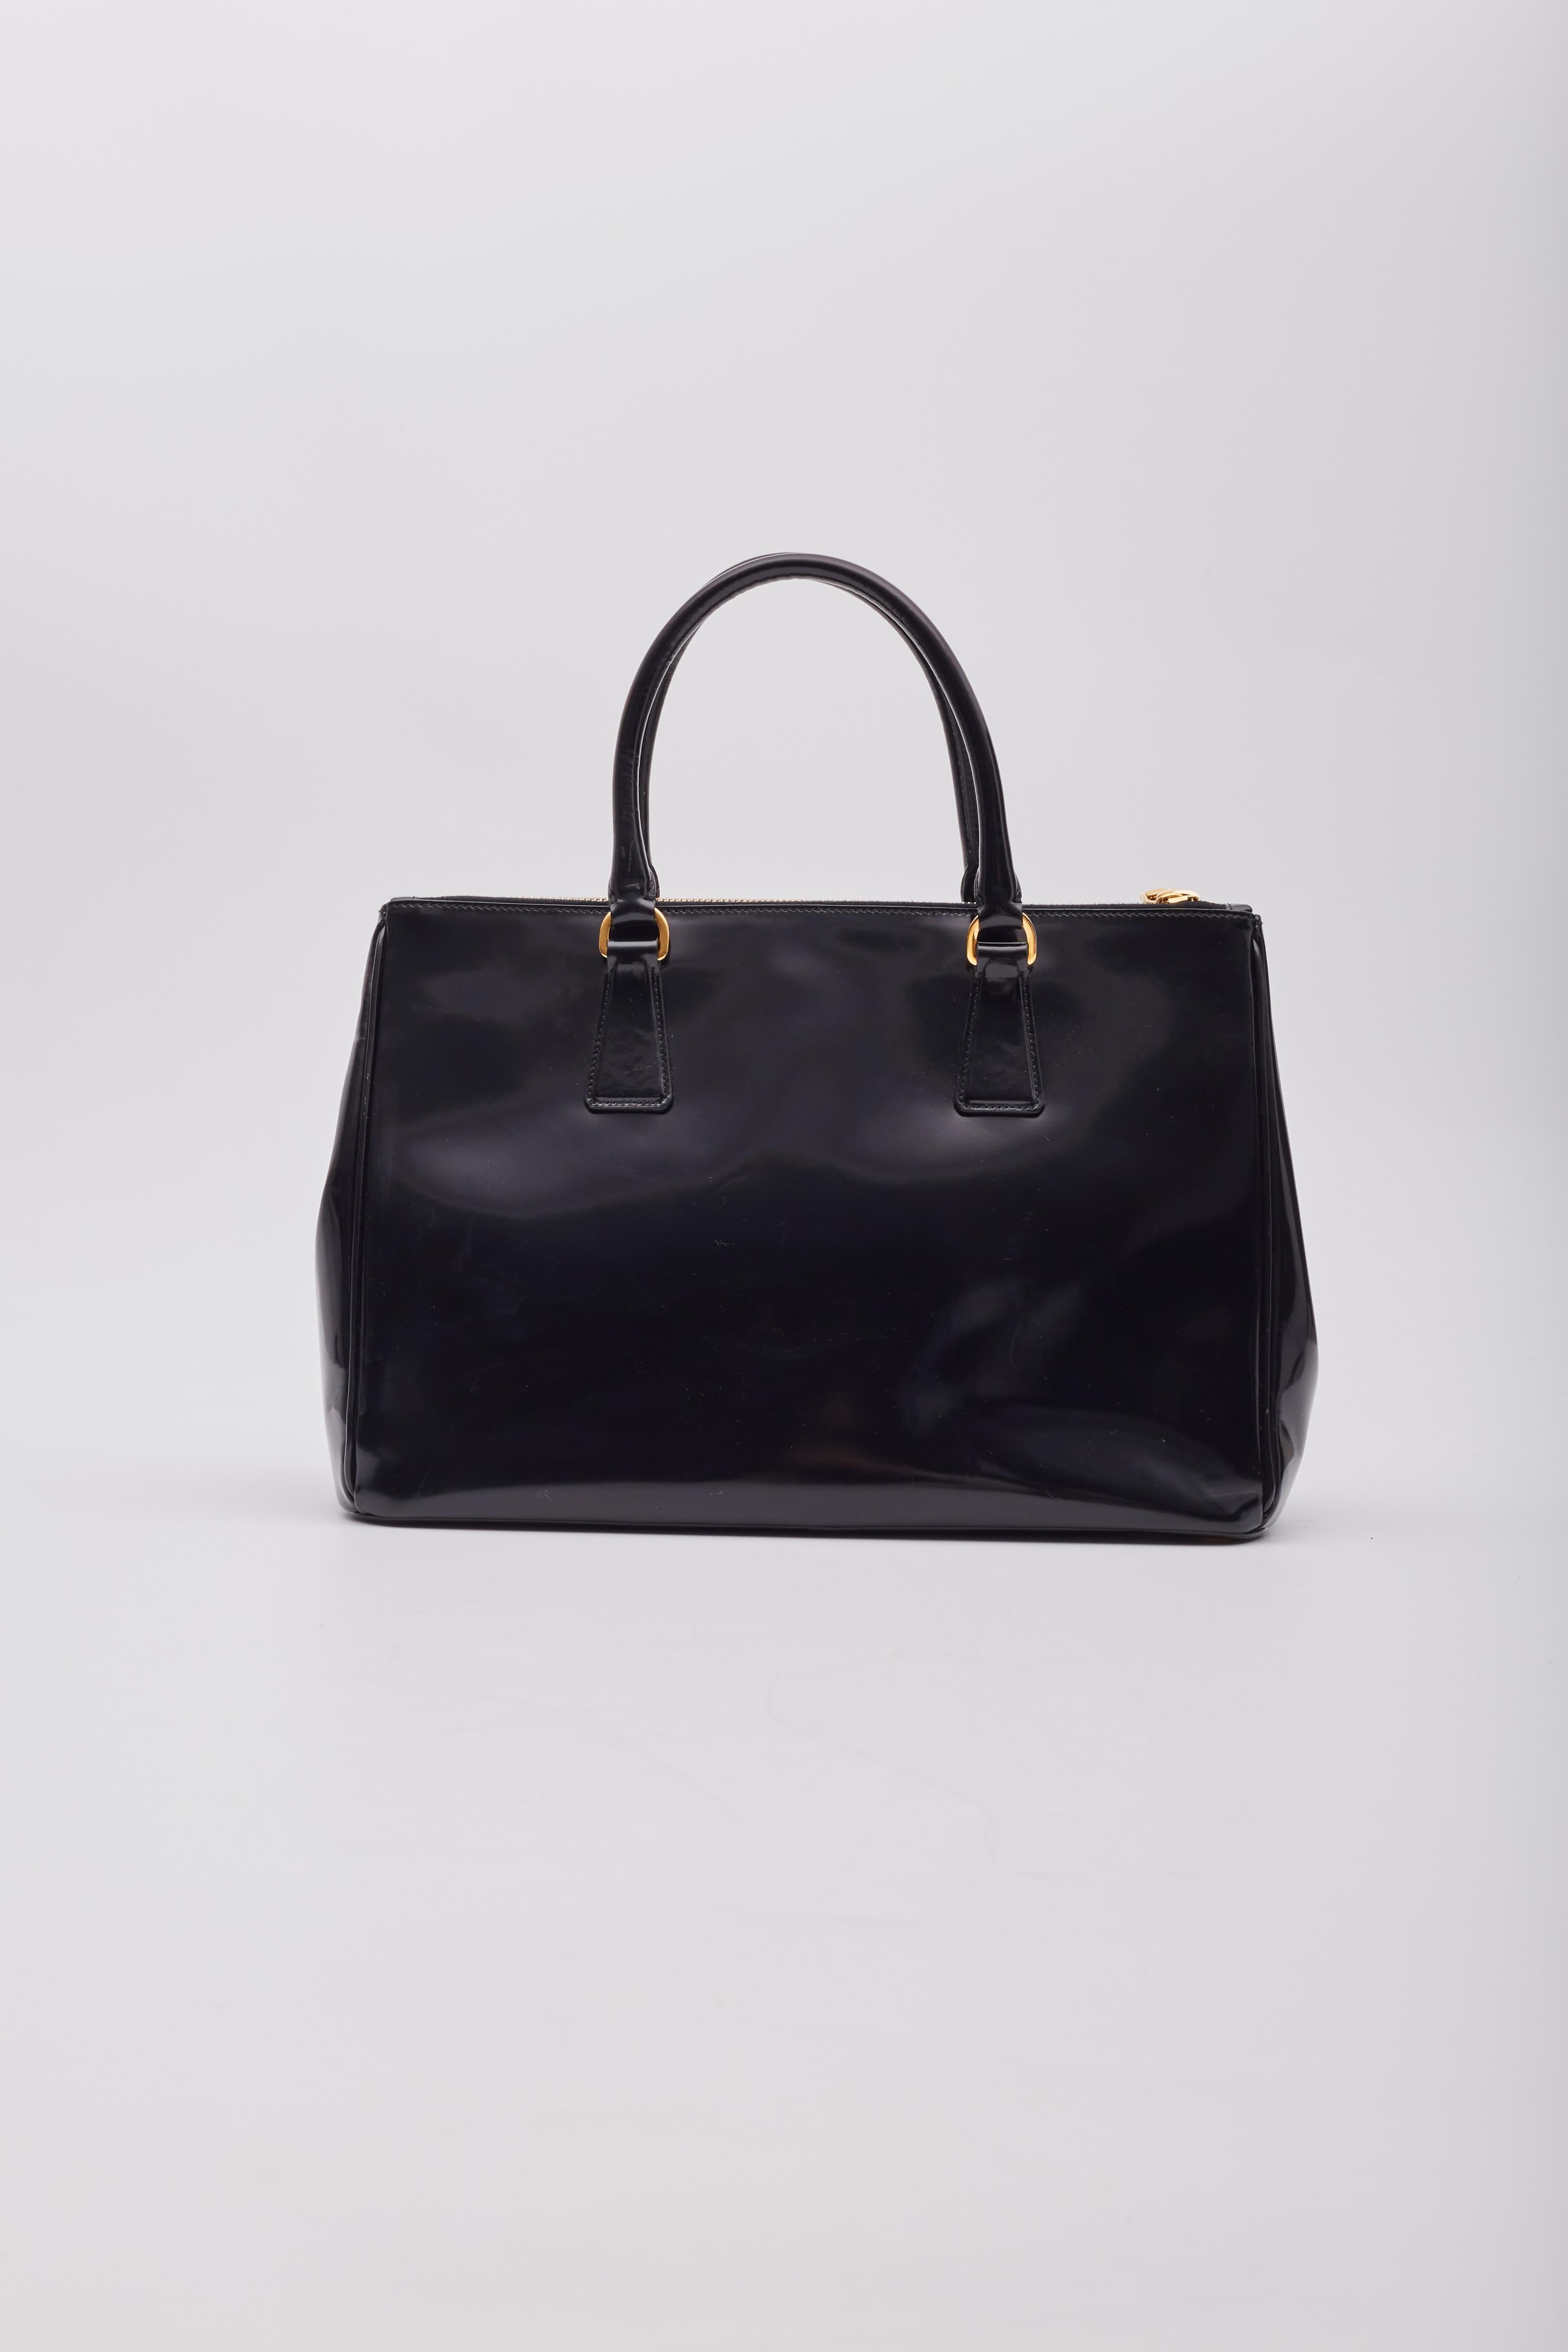 Prada Black Patent Leather Galleria Tote Bag For Sale 2